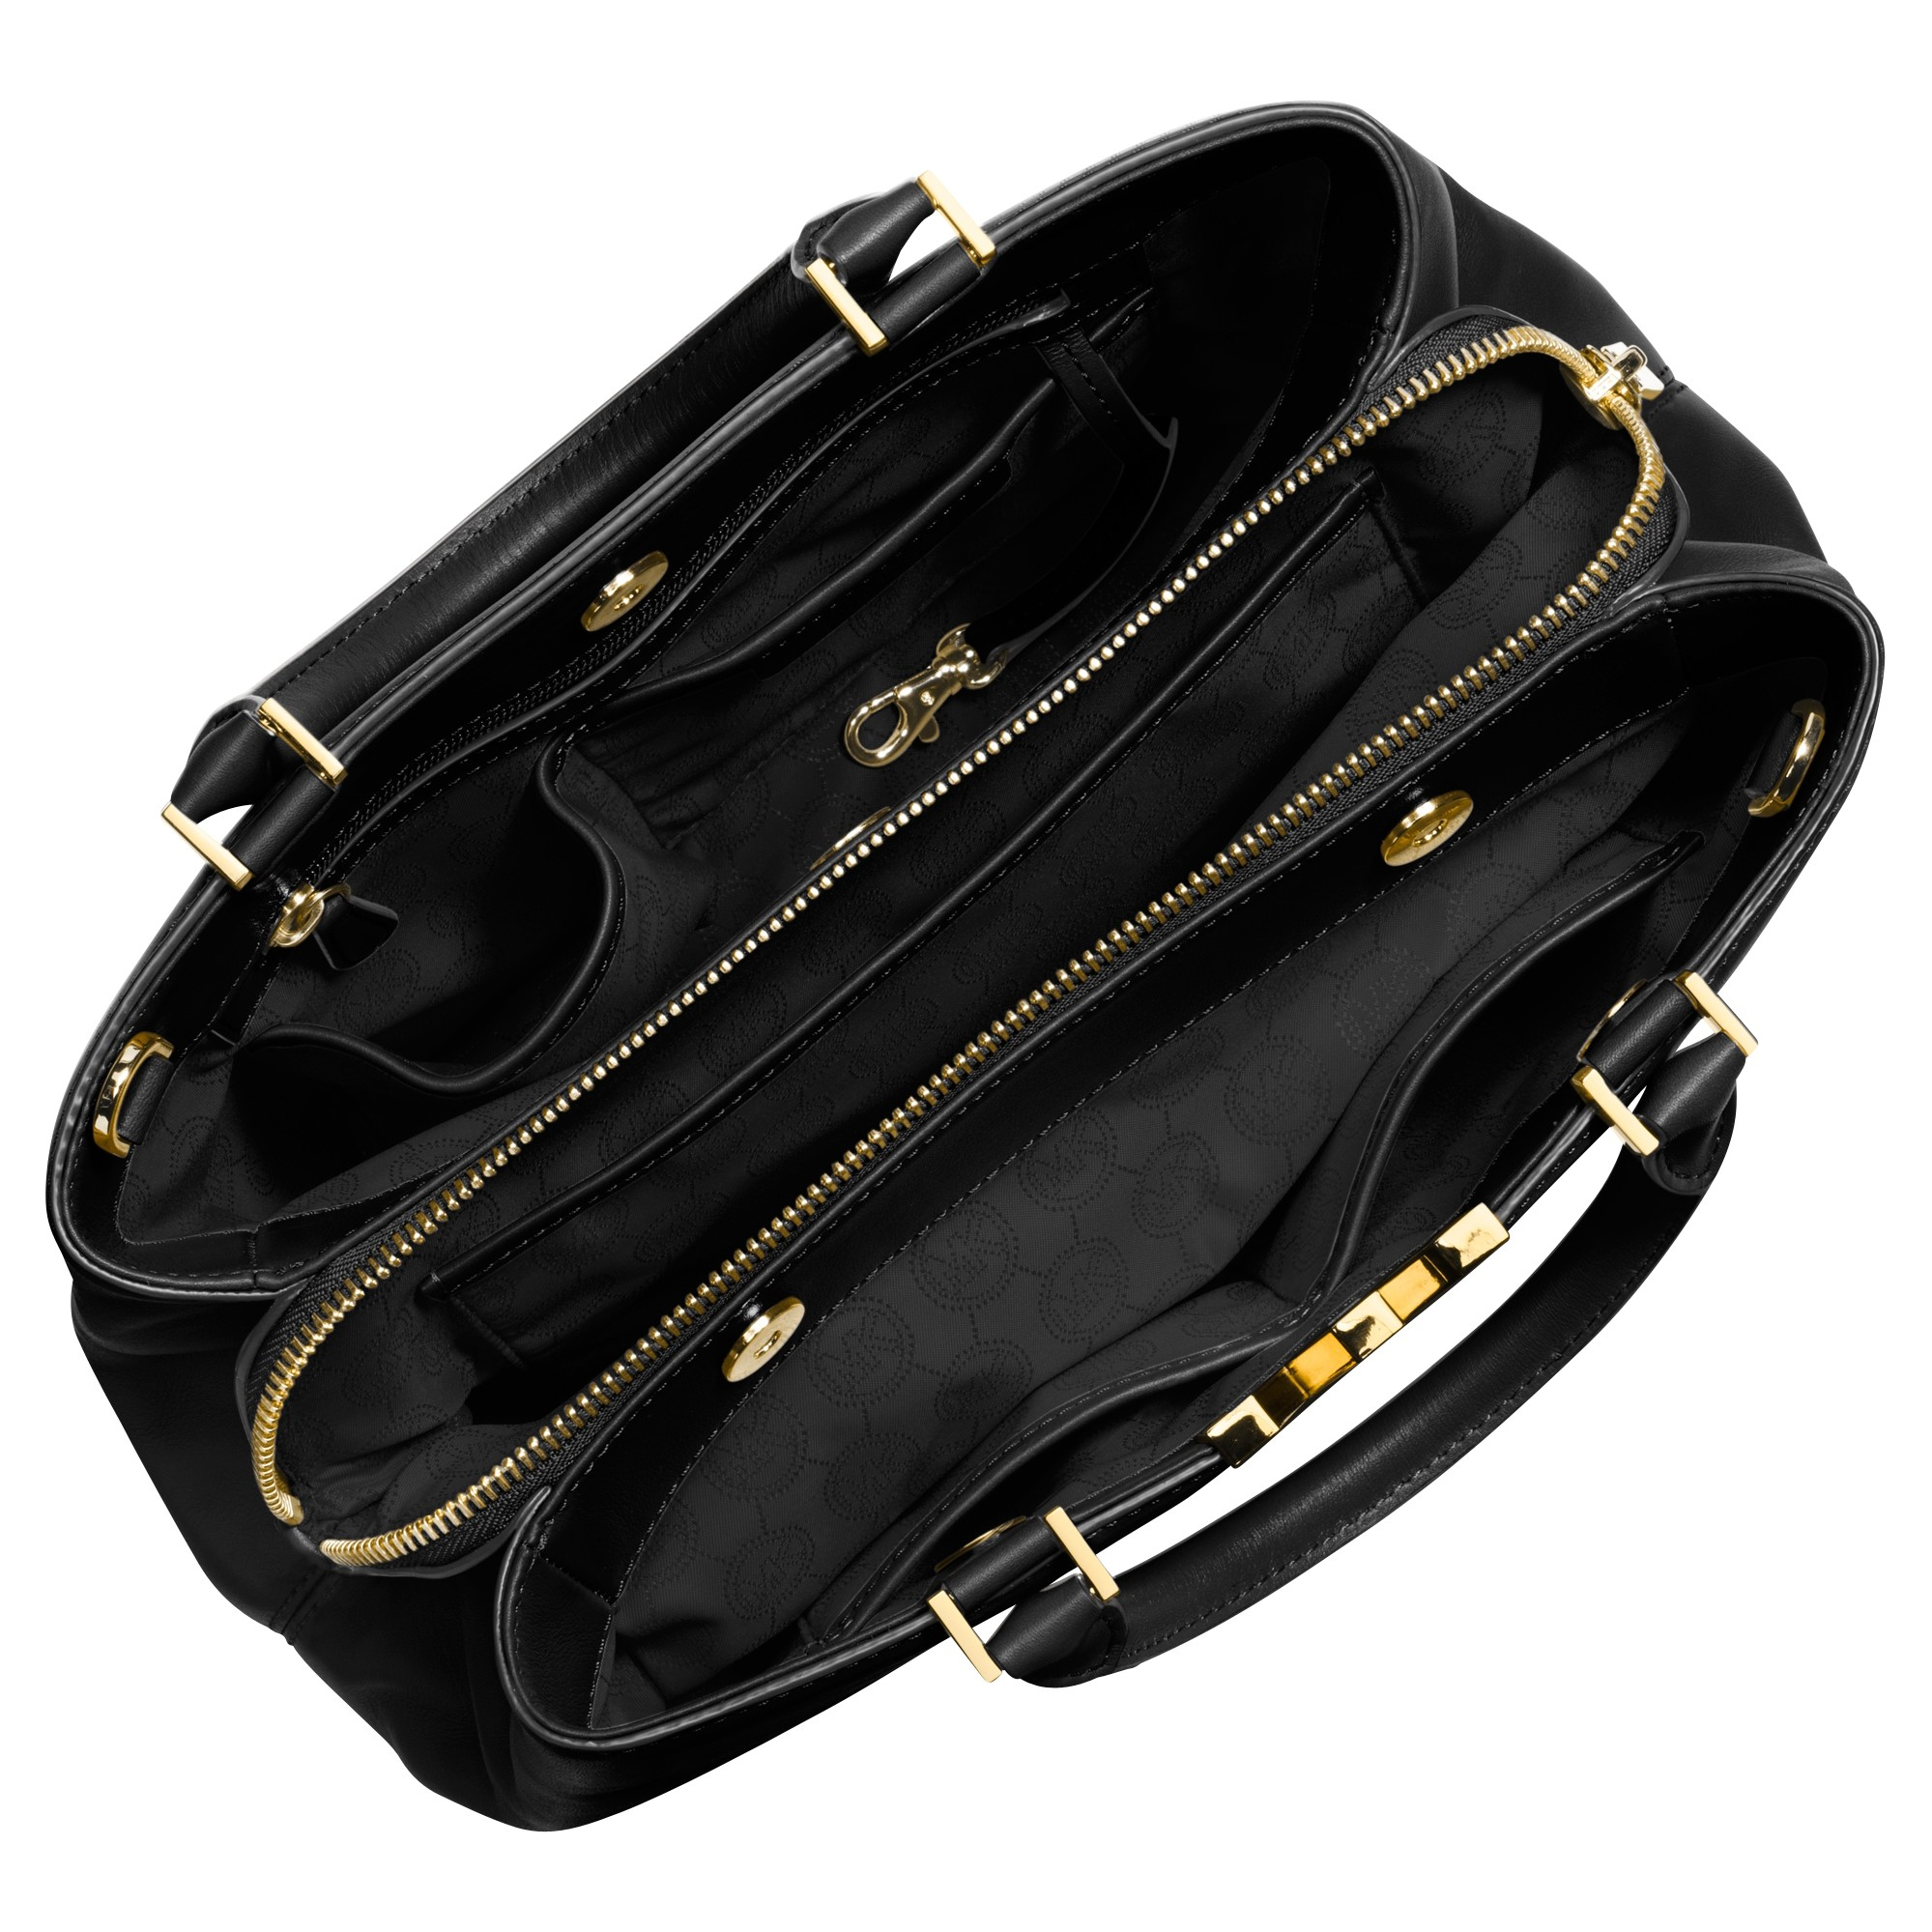 Michael Michael Kors Florence Large Leather Satchel Bag in Black - Lyst